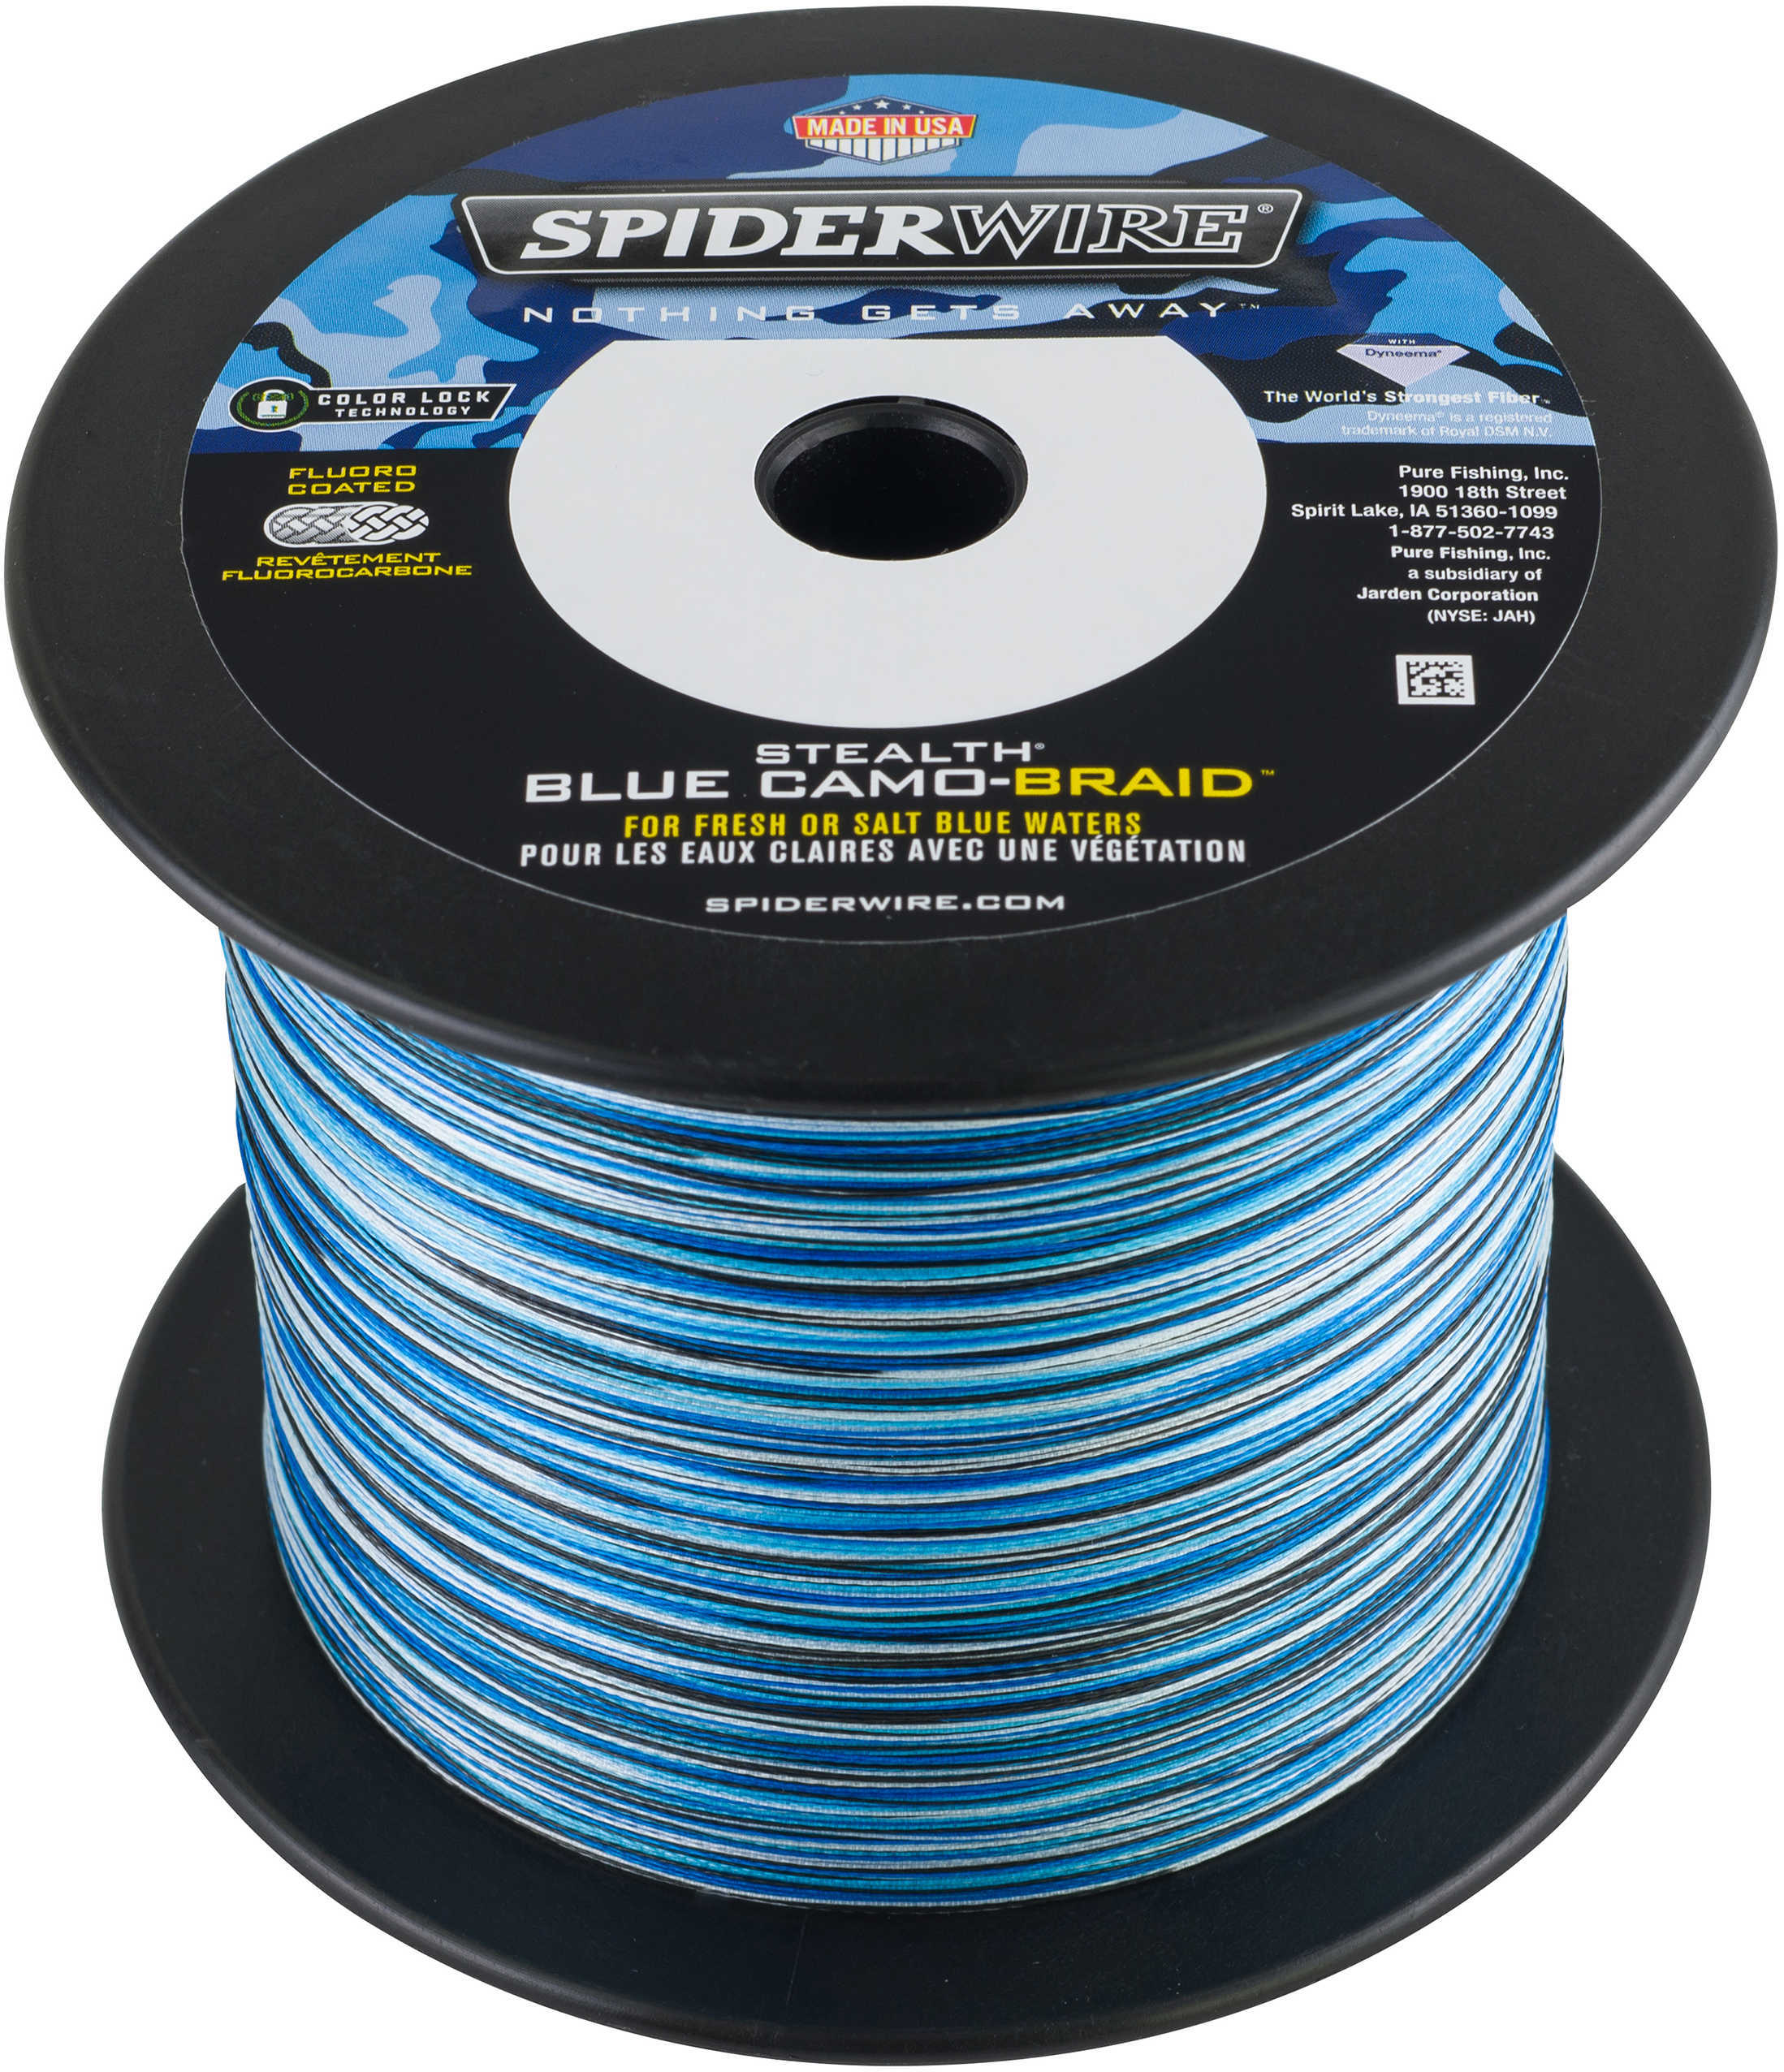 Spiderwire Stealth Braid 3000 Yards , 20 lbs Strength, 0.010" Diameter, Blue Camo Md: 1370464